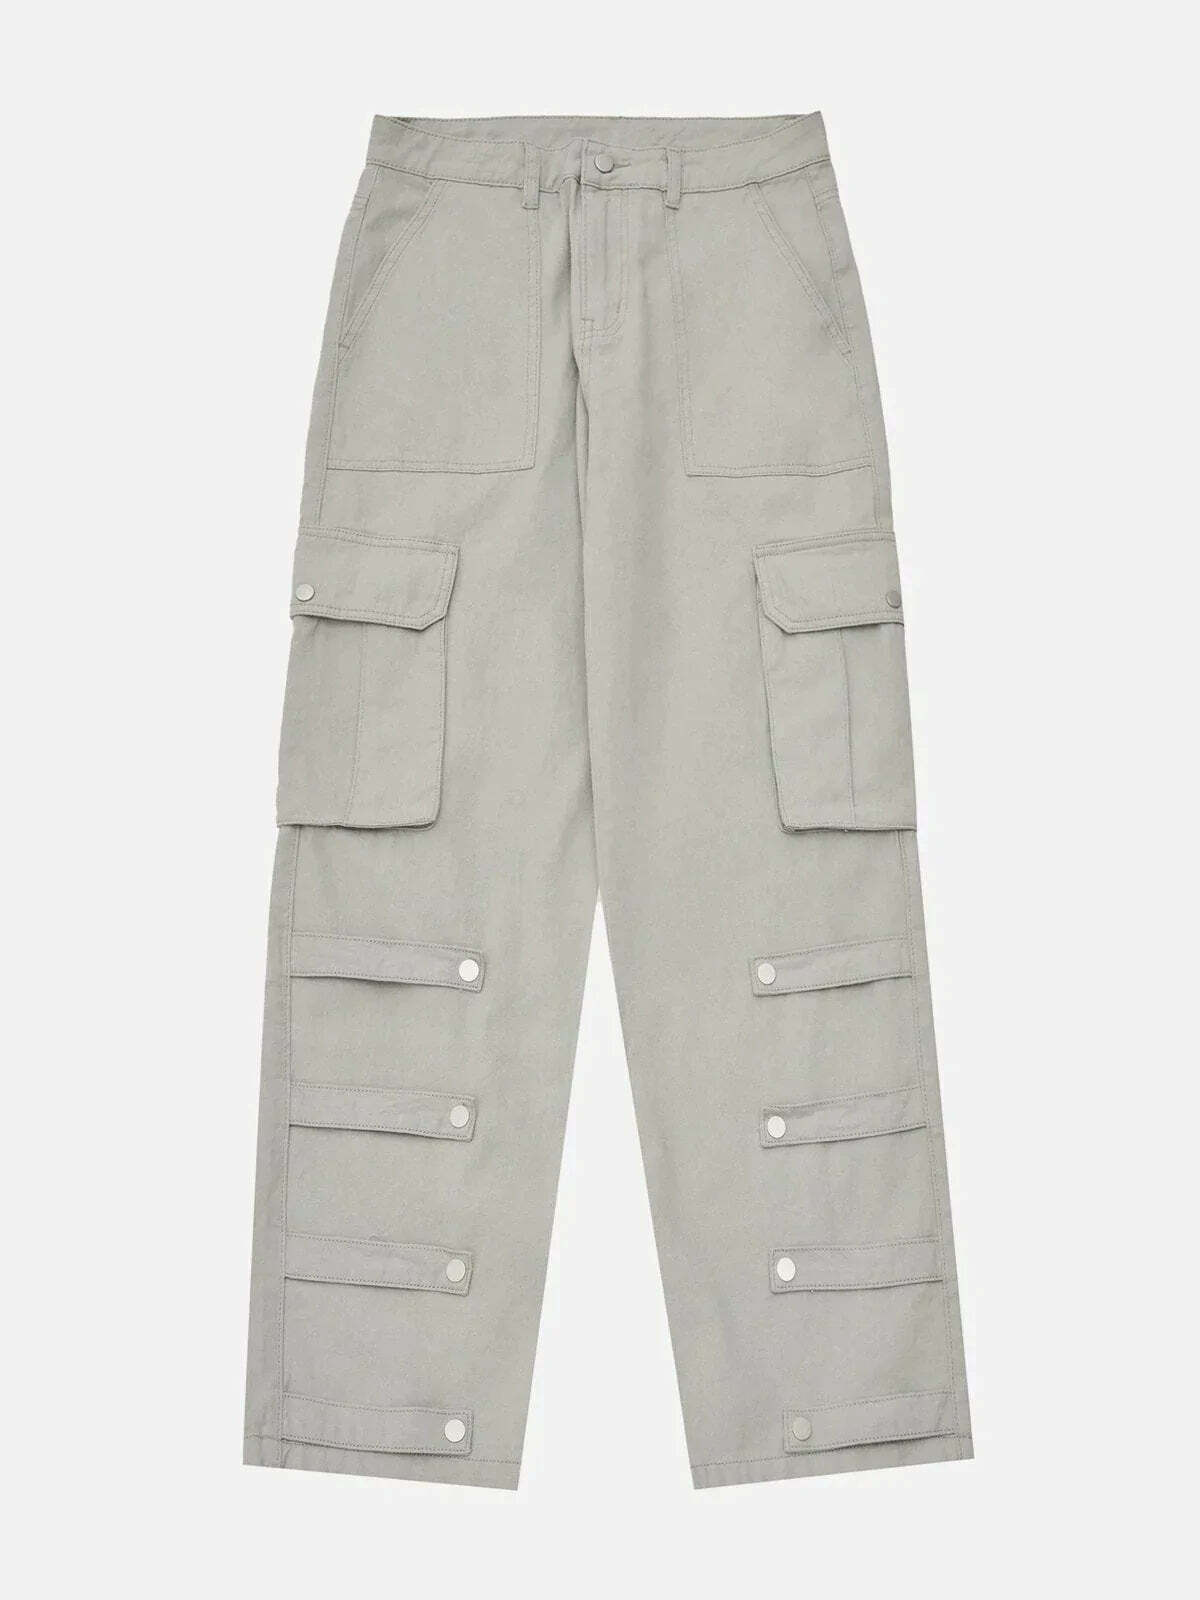 patchwork flap pants edgy streetwear staple 1346